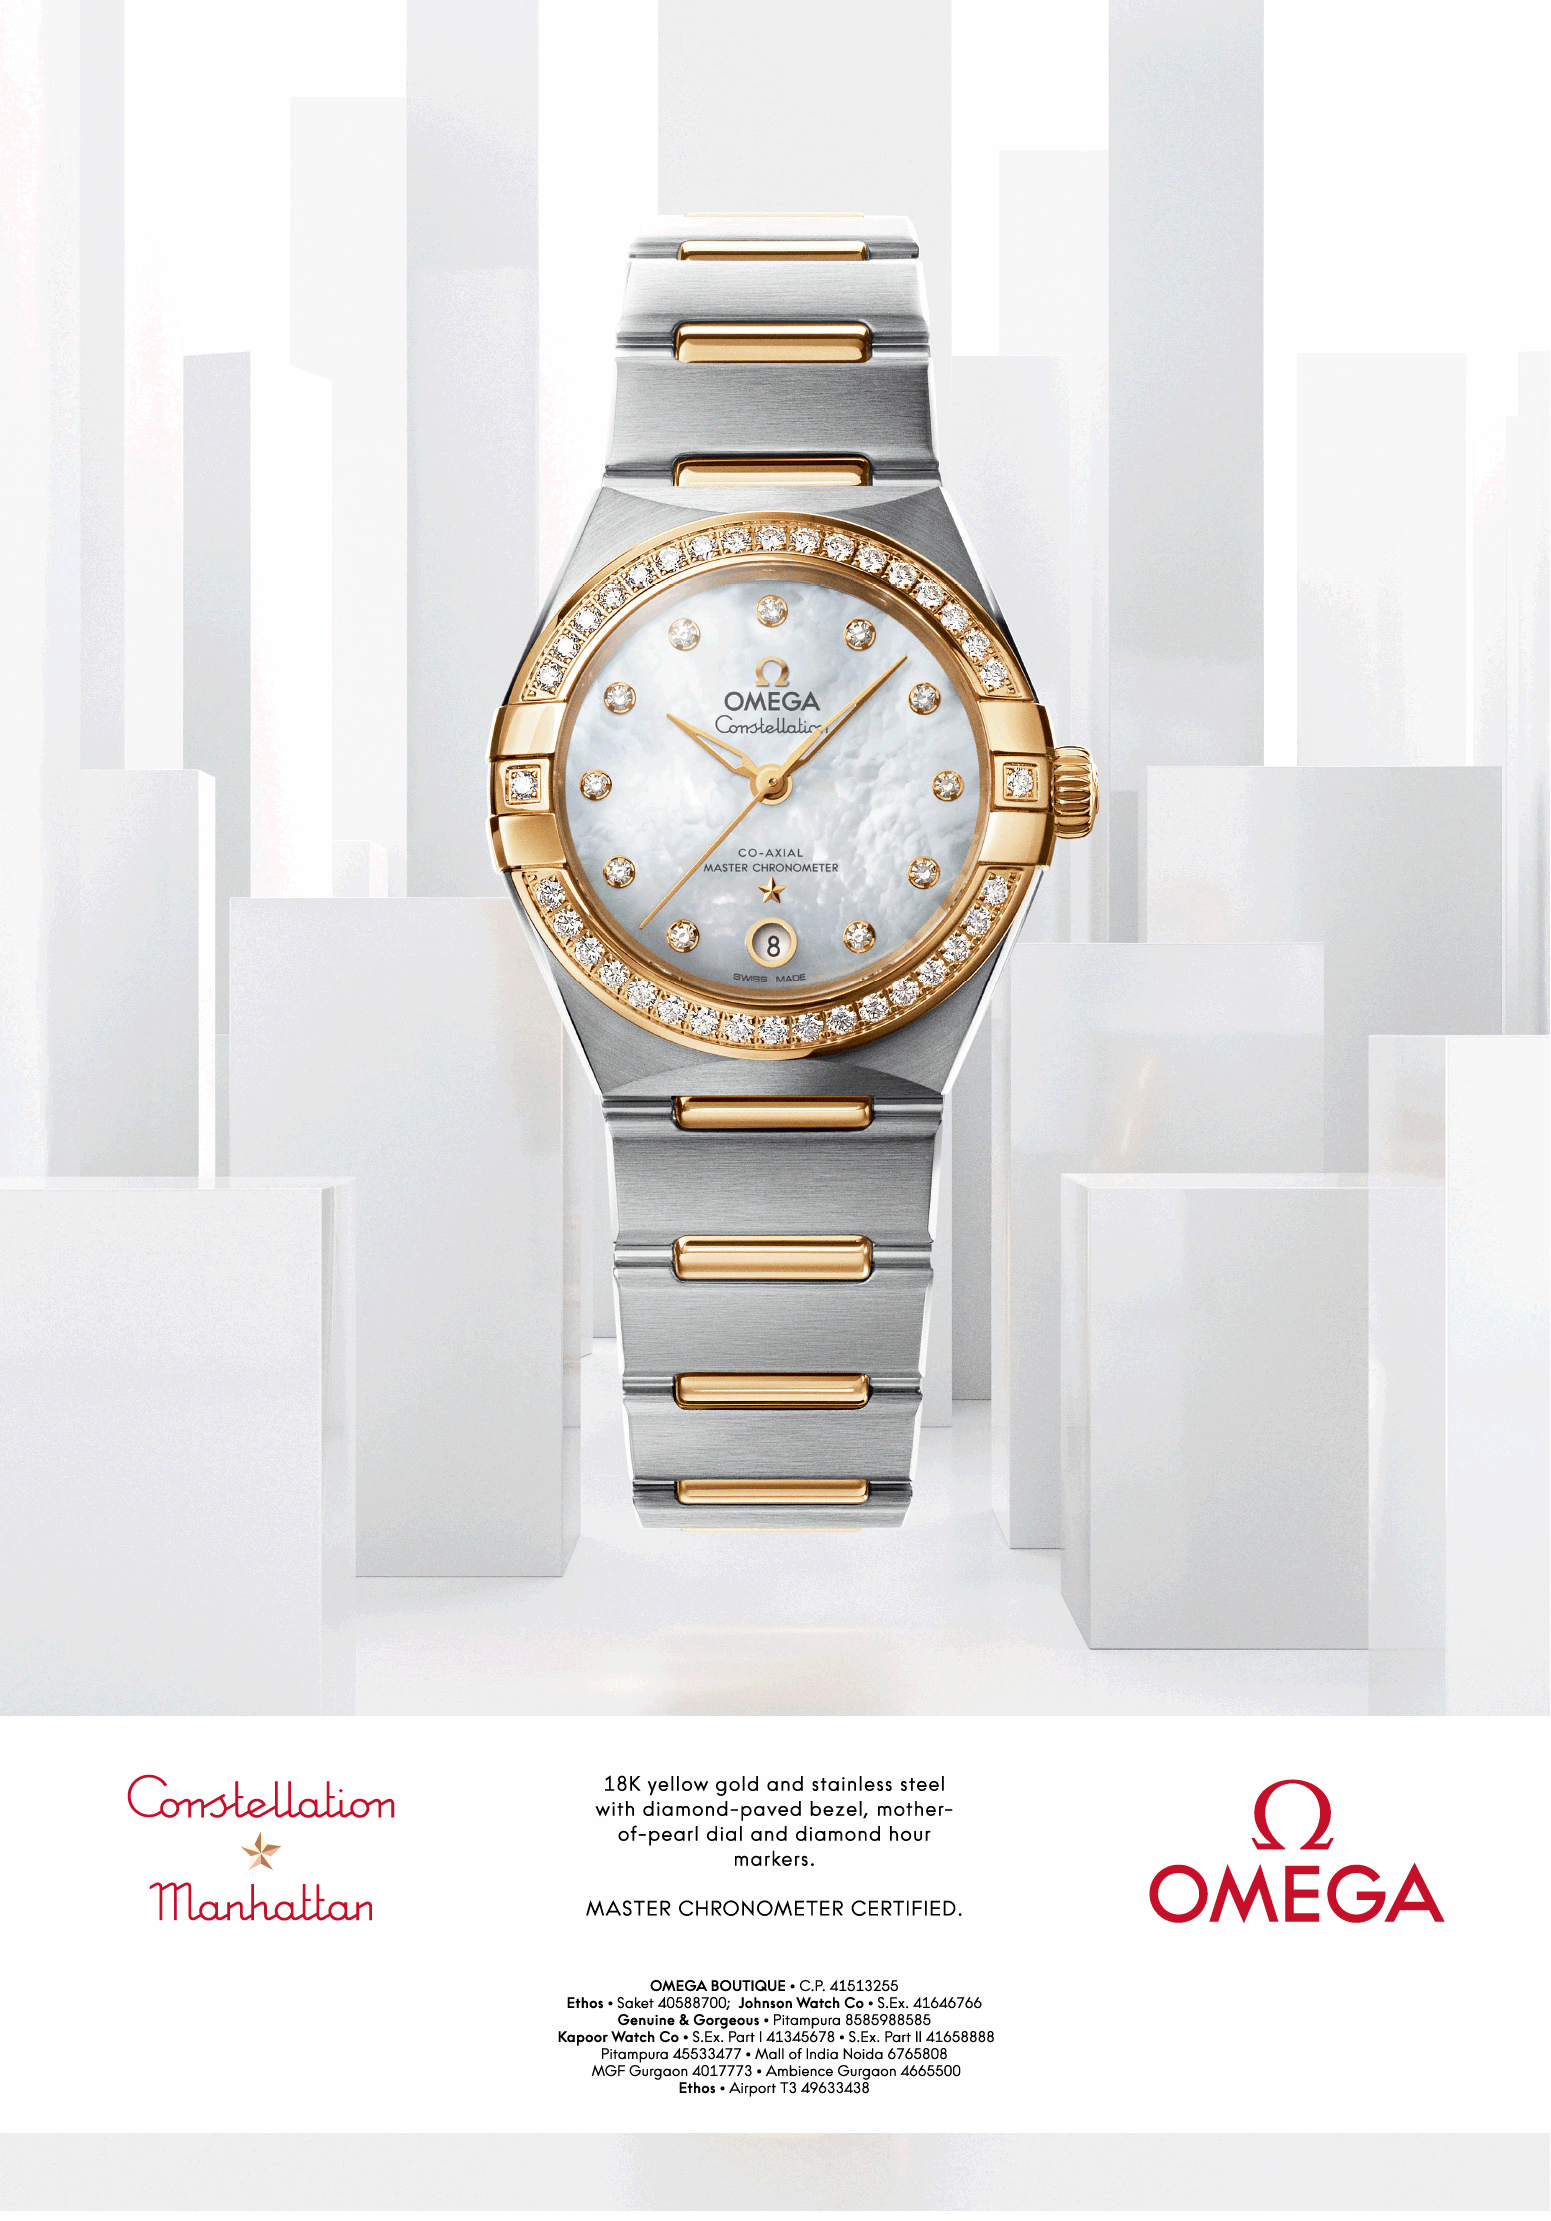 omega-watches-constellation-manhattan-ad-delhi-times-23-05-2019.png